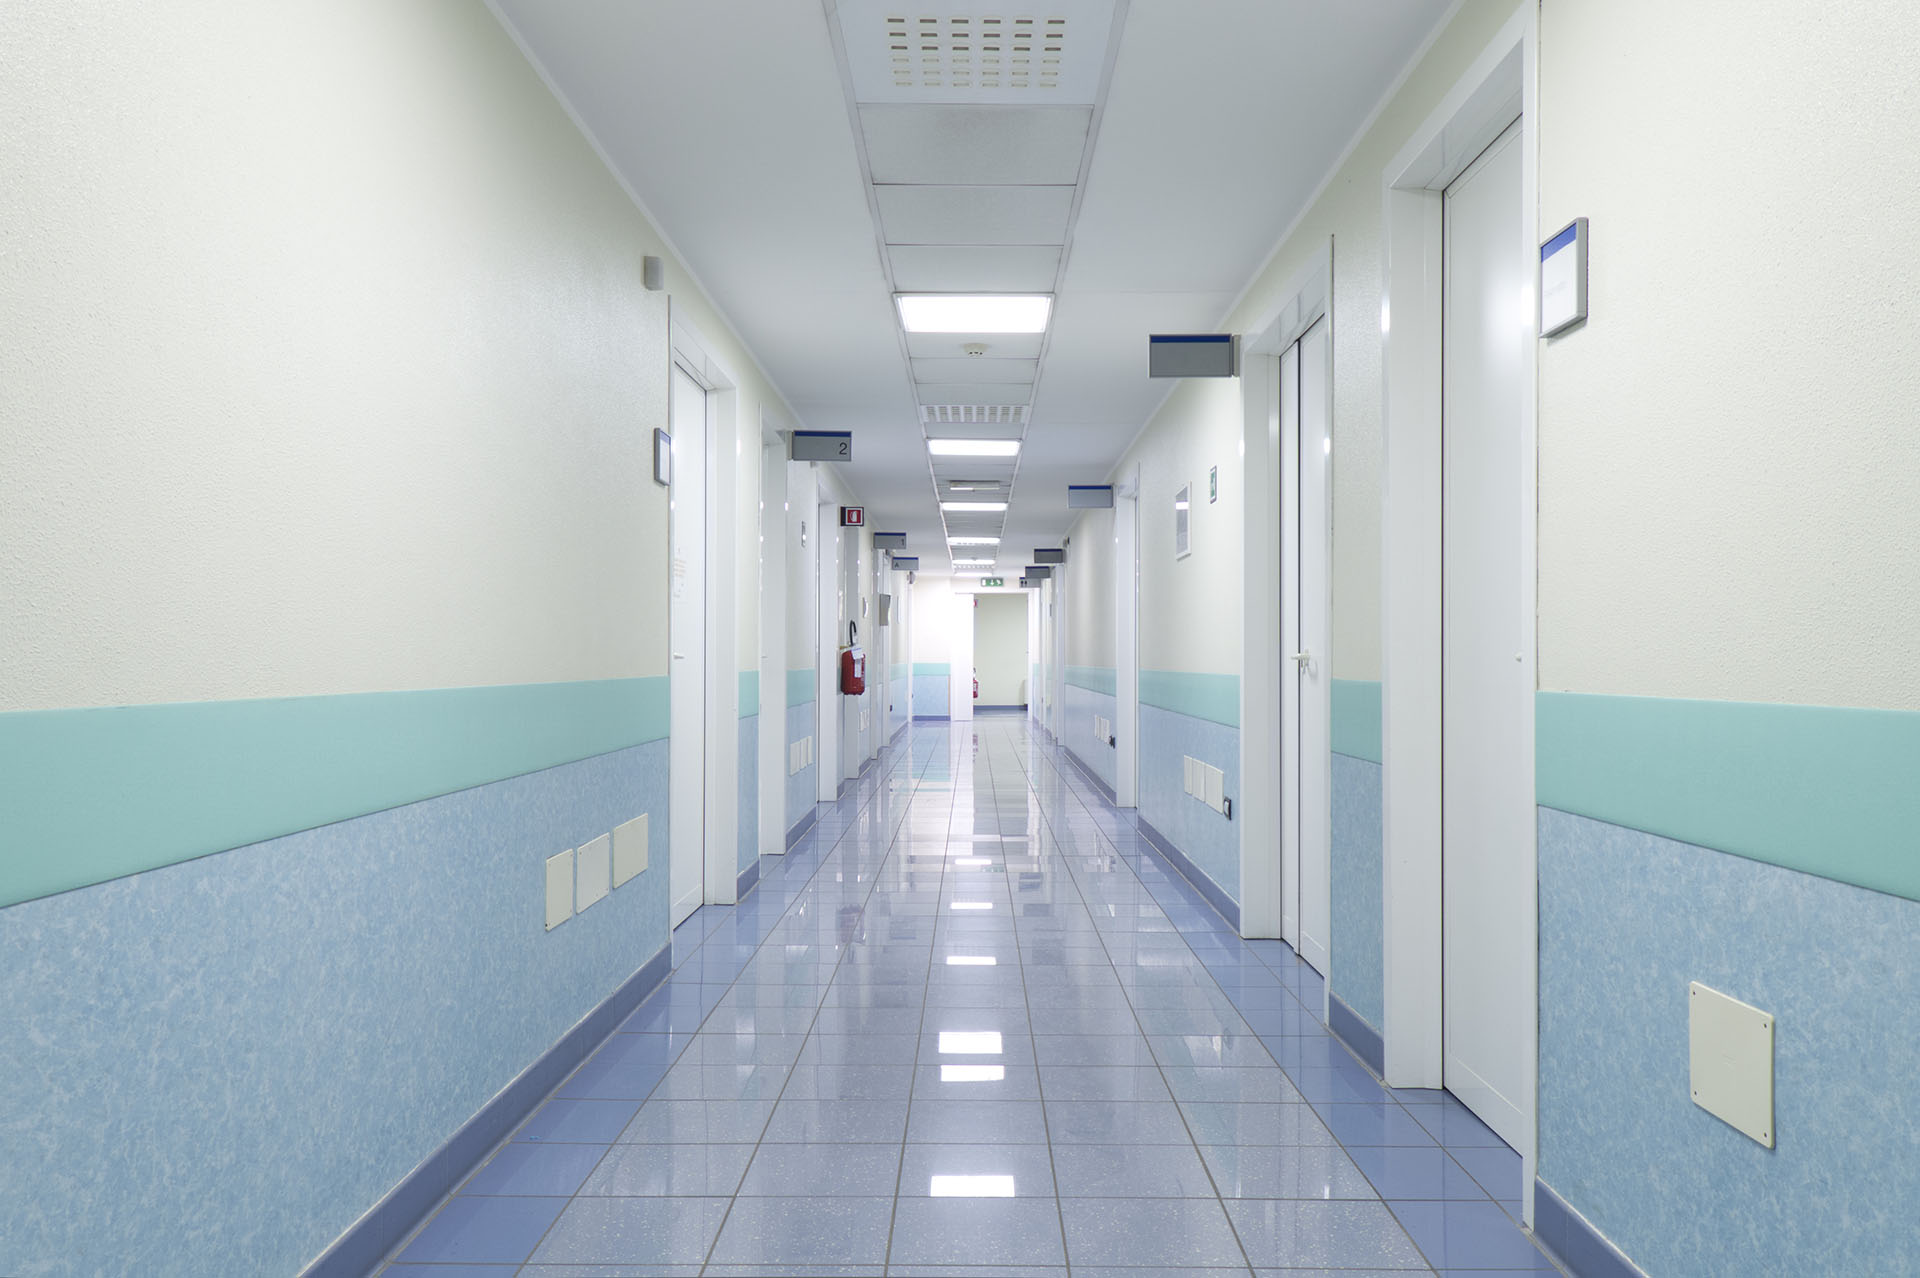 33 patients with suspected coronavirus are under observation in Kazakhstan